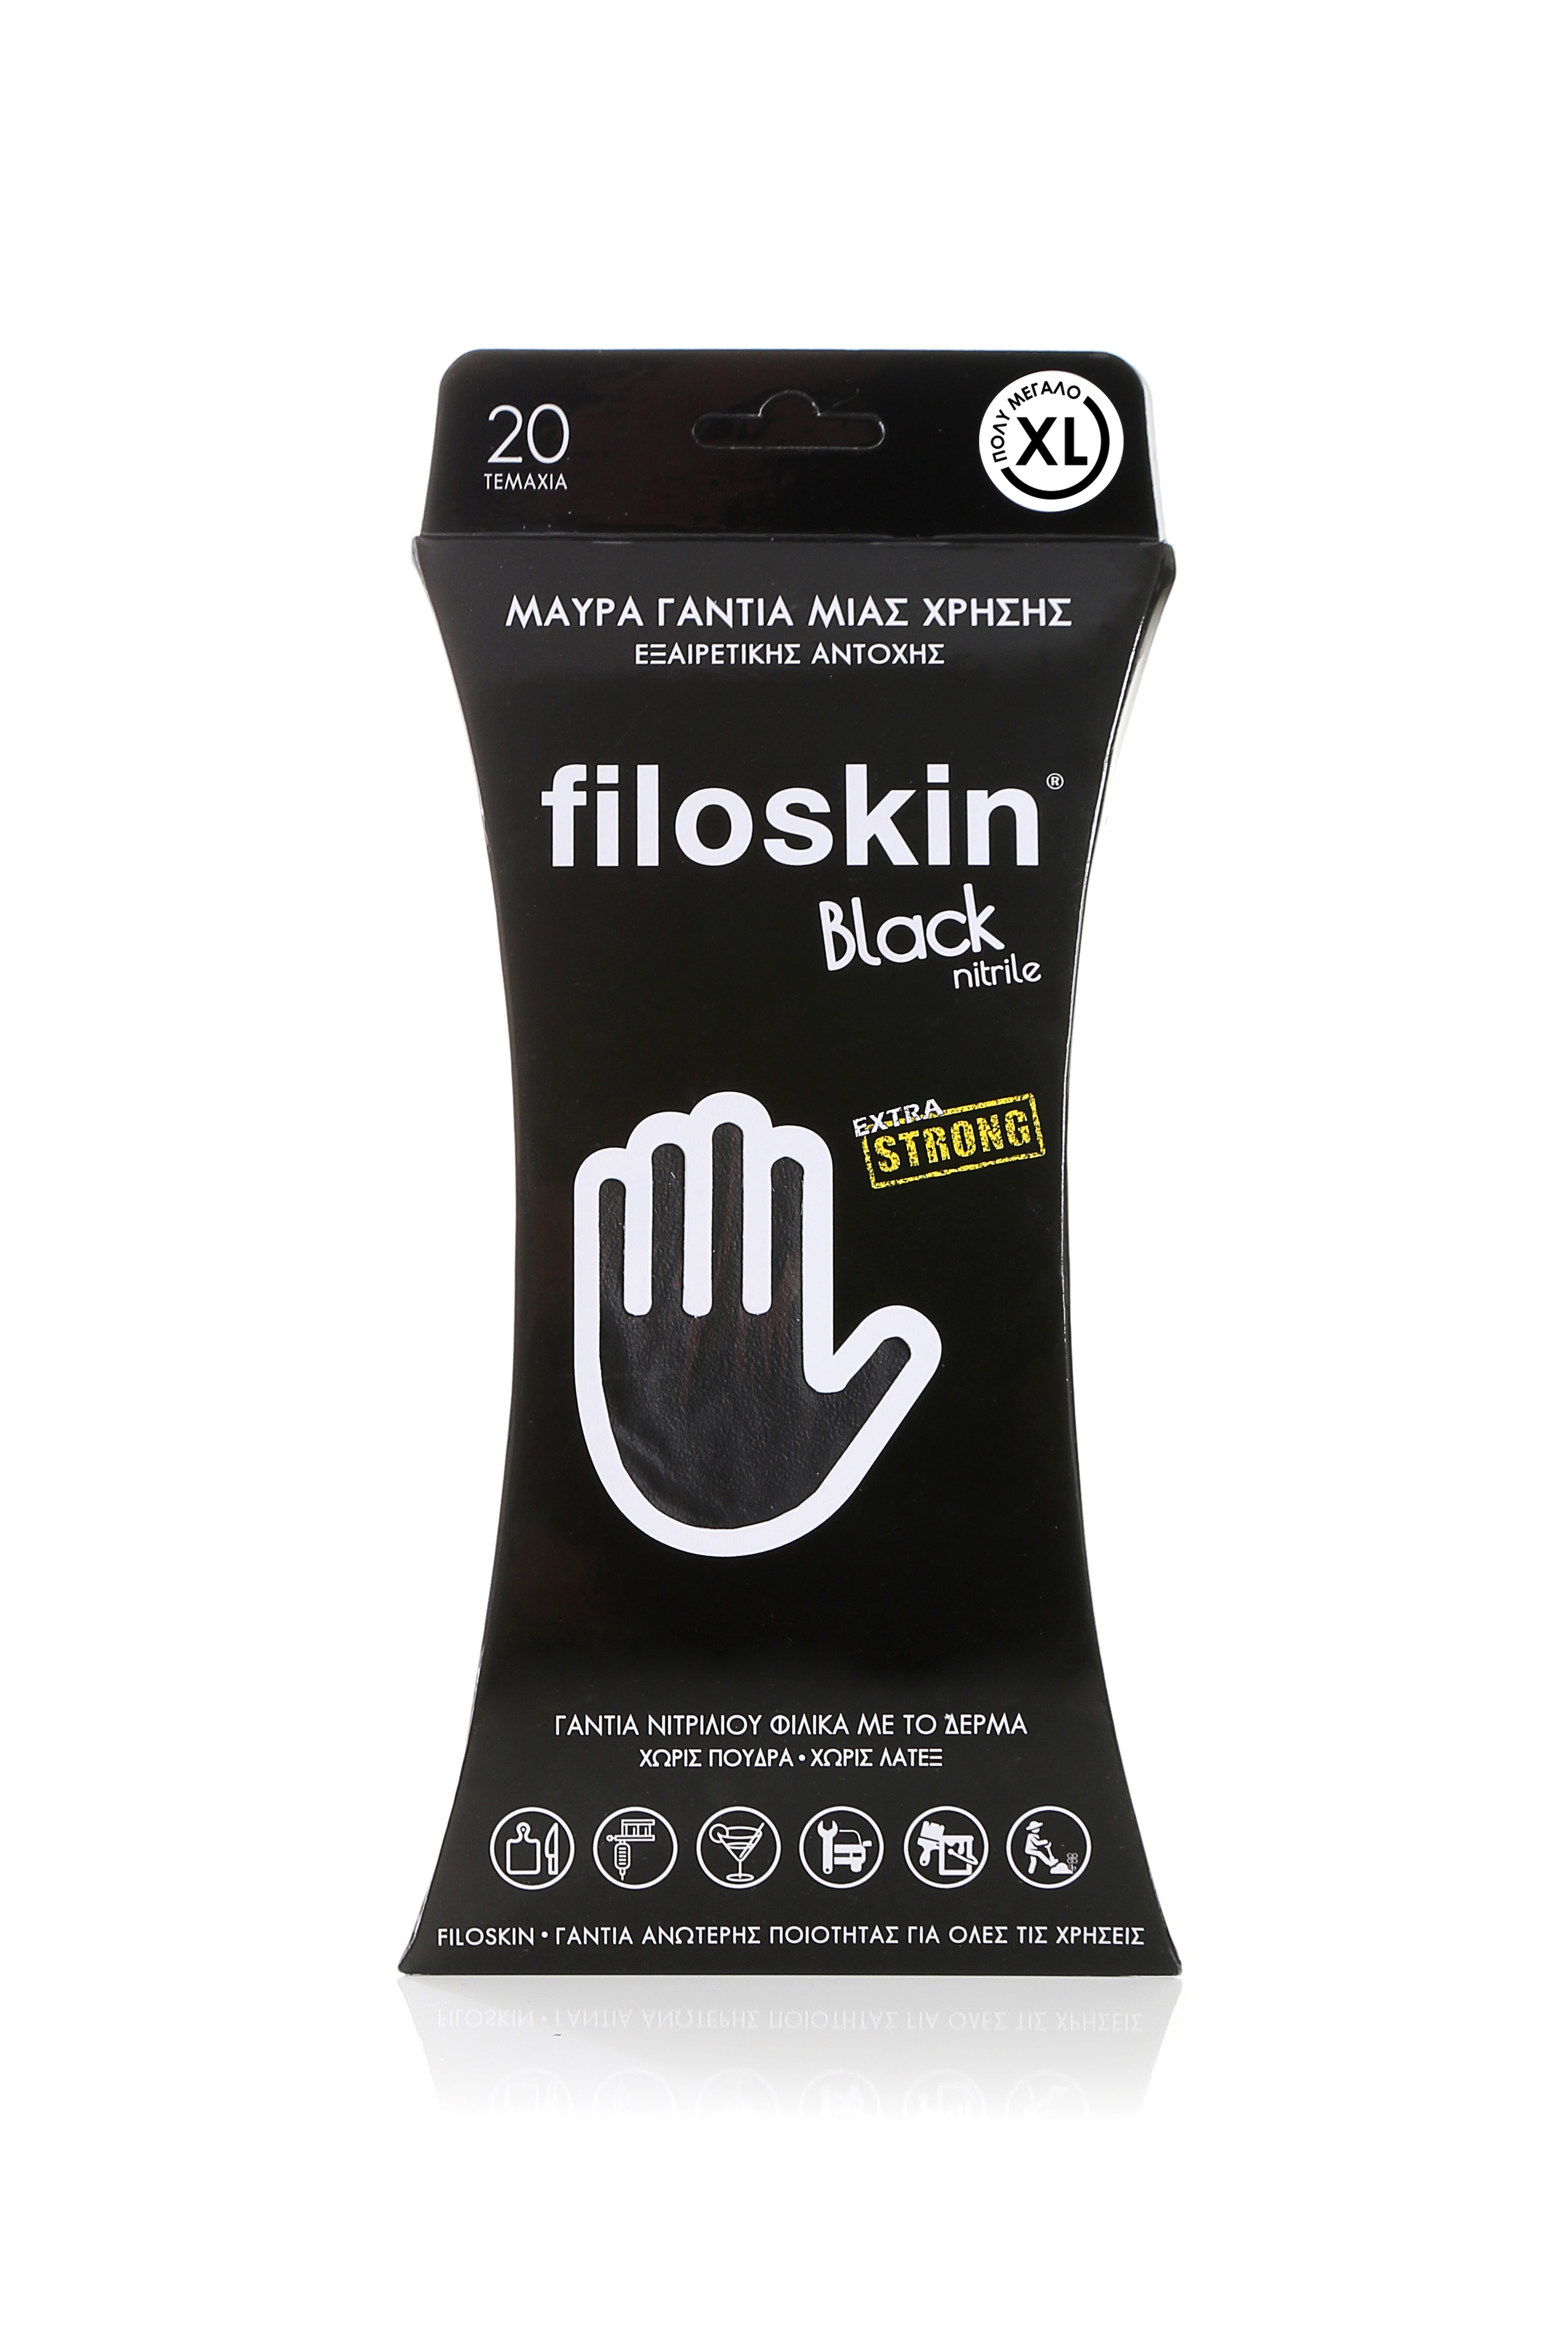 Cosmomed Γάντια Νιτριλίου χωρίς πούδρα Μαύρα Extra Strong XL Filoskin (20τεμ)